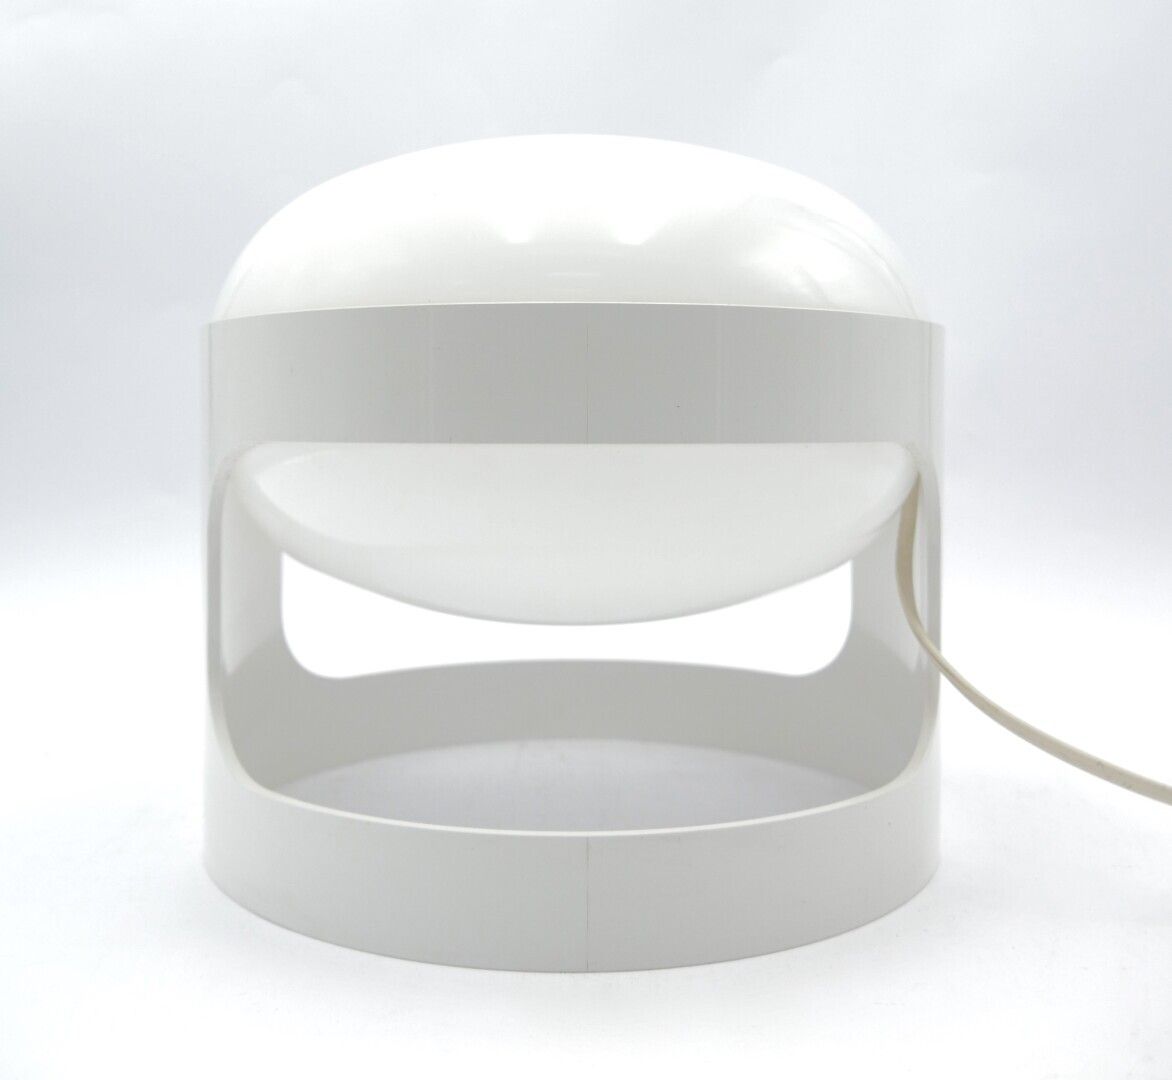 Null 乔-科伦坡(1930-1971)

KD27型台灯，白色ABS塑料材质

闭合尺寸：24 x 26 cm. 9,5 x 10 1/4 in. 约。

&hellip;